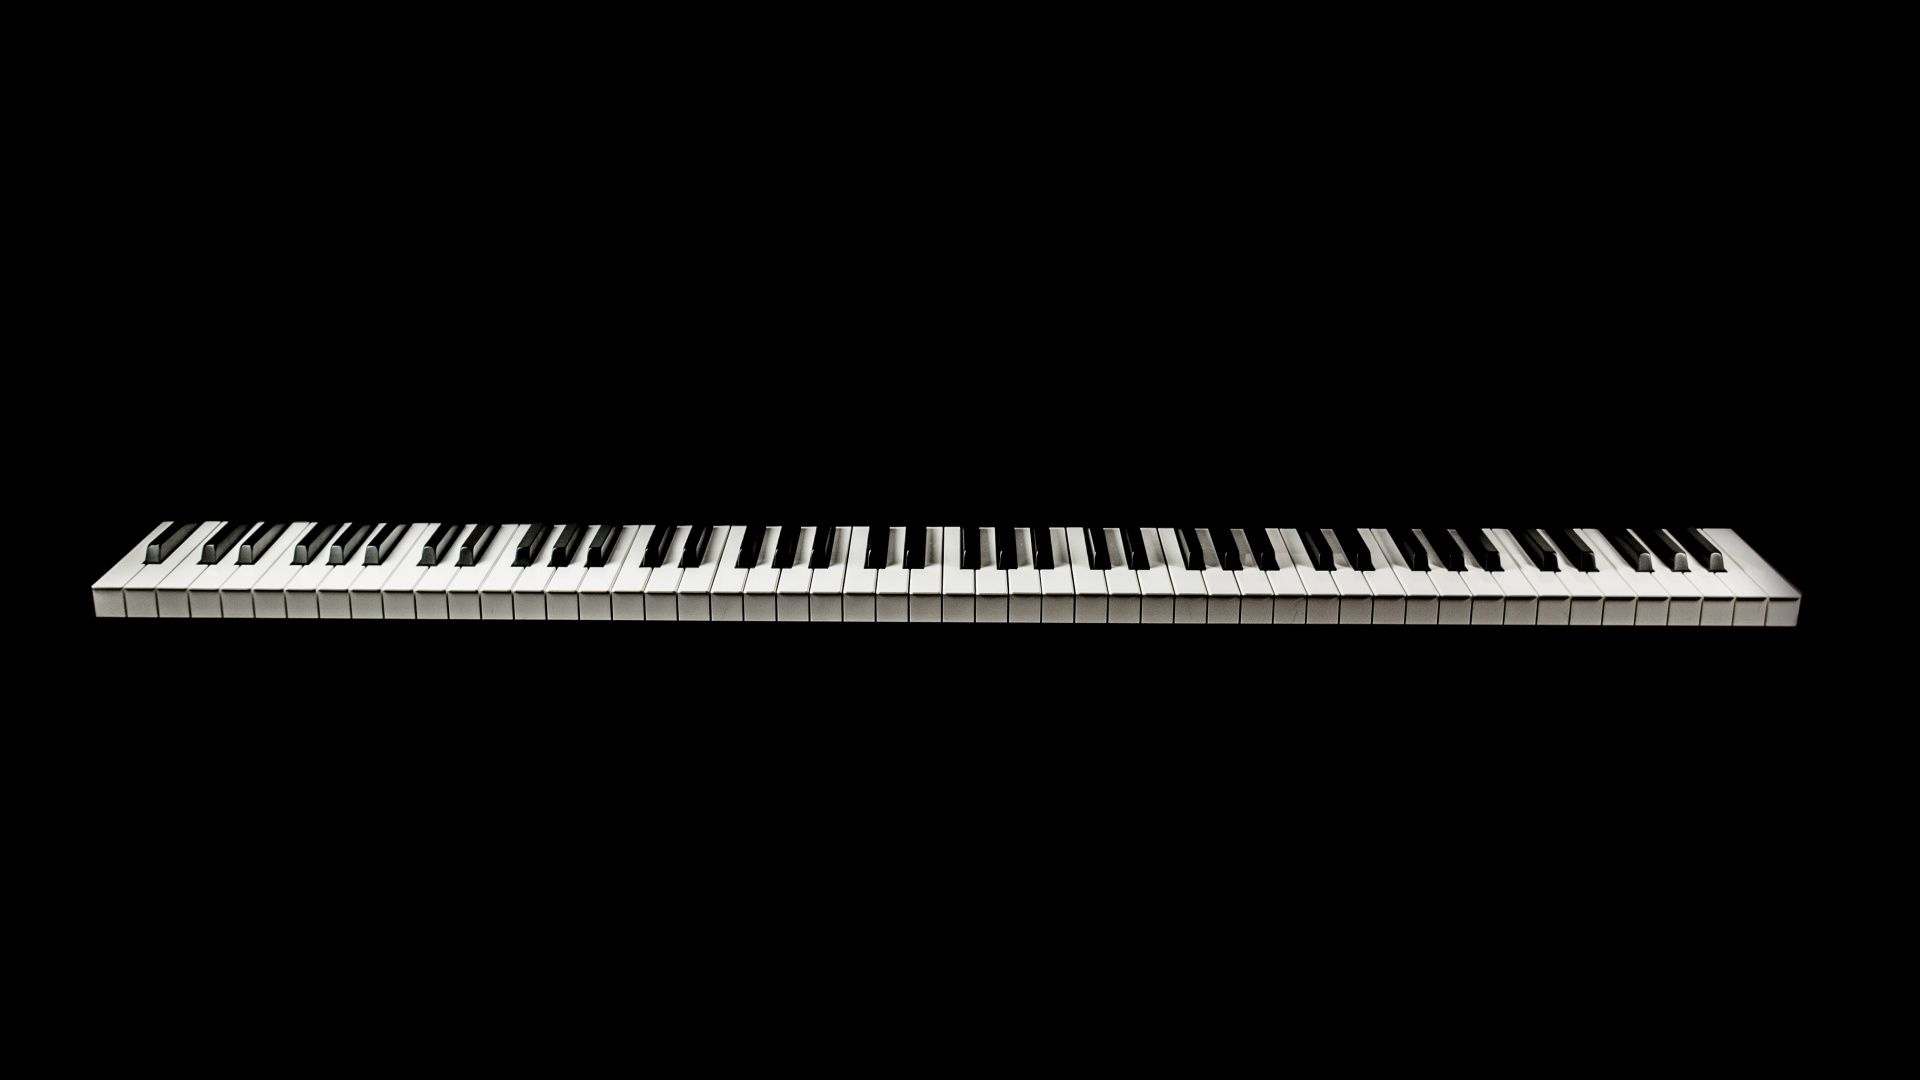 Clavier Musical, Piano Numérique, Piano Électrique, Piano, Clavier. Wallpaper in 1920x1080 Resolution